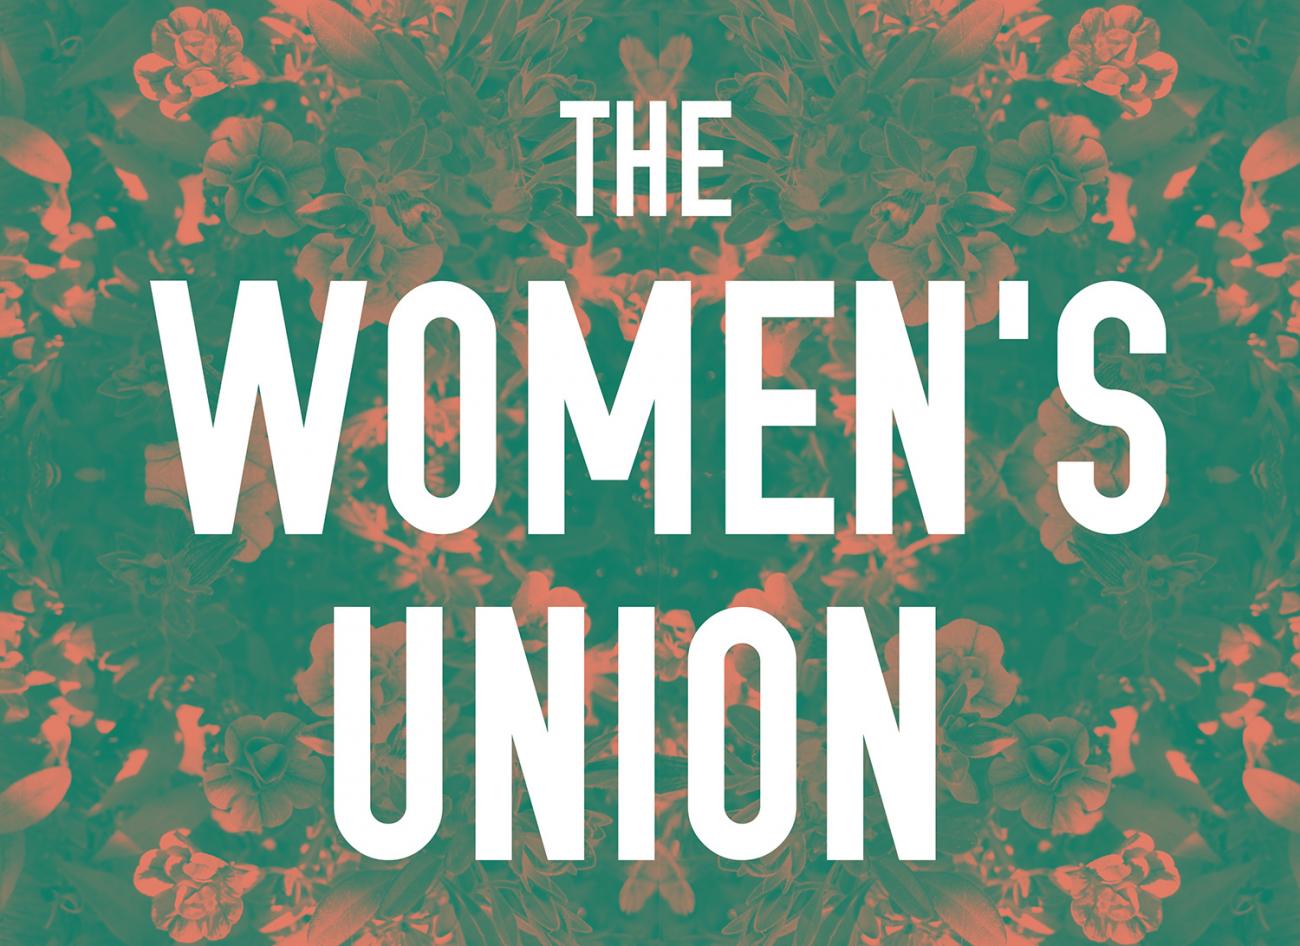 The Women's Union banner